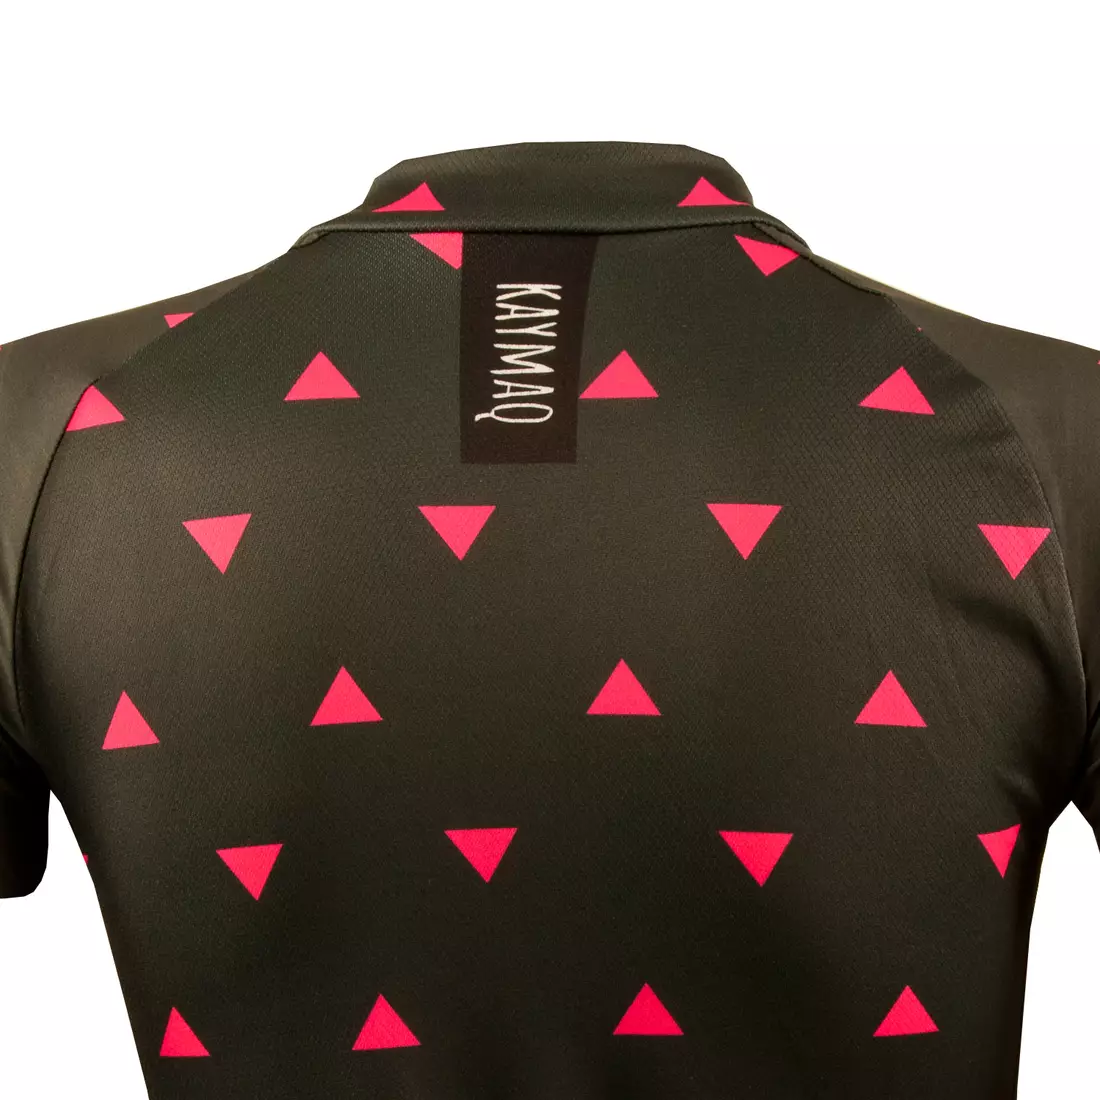 KAYMAQ DESIGN W1-W42 tricou de ciclism cu mâneci scurte pentru femei